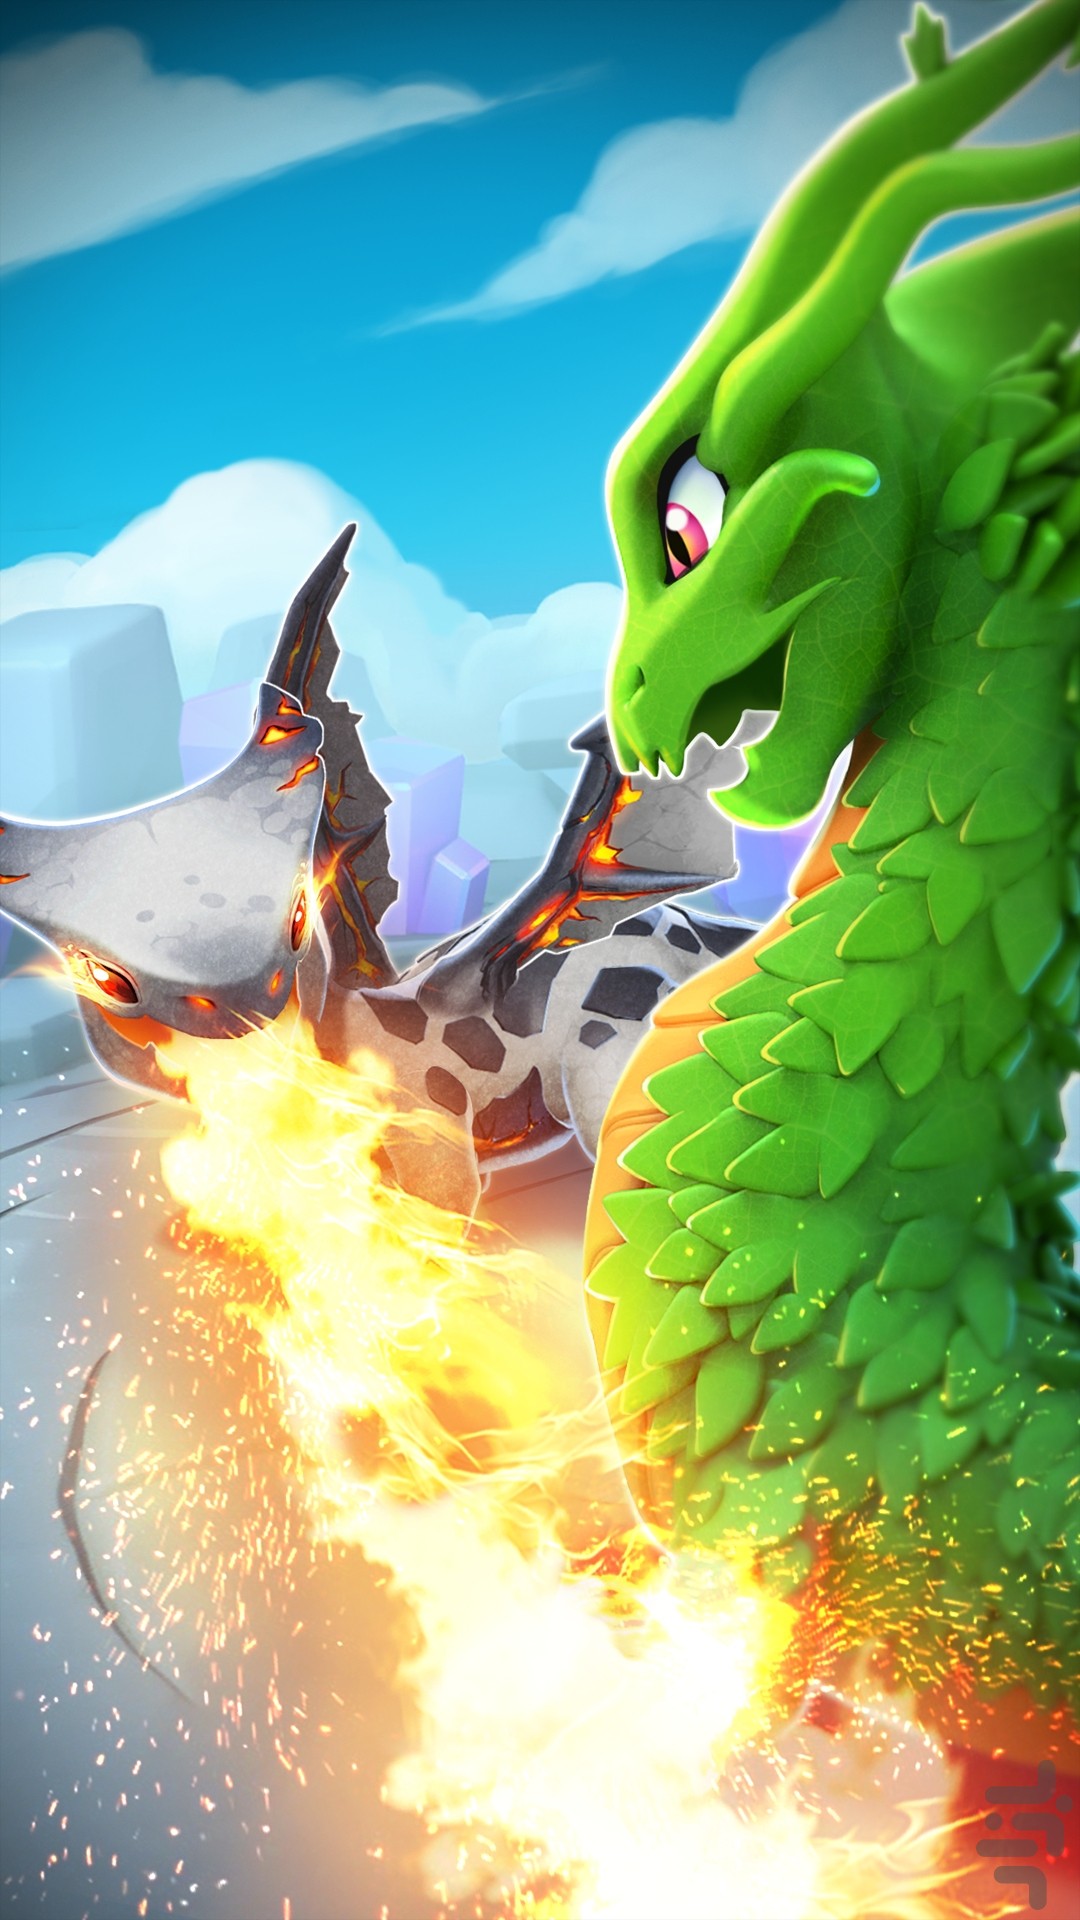 dragon mania legends gameloft forum how to train your dragon